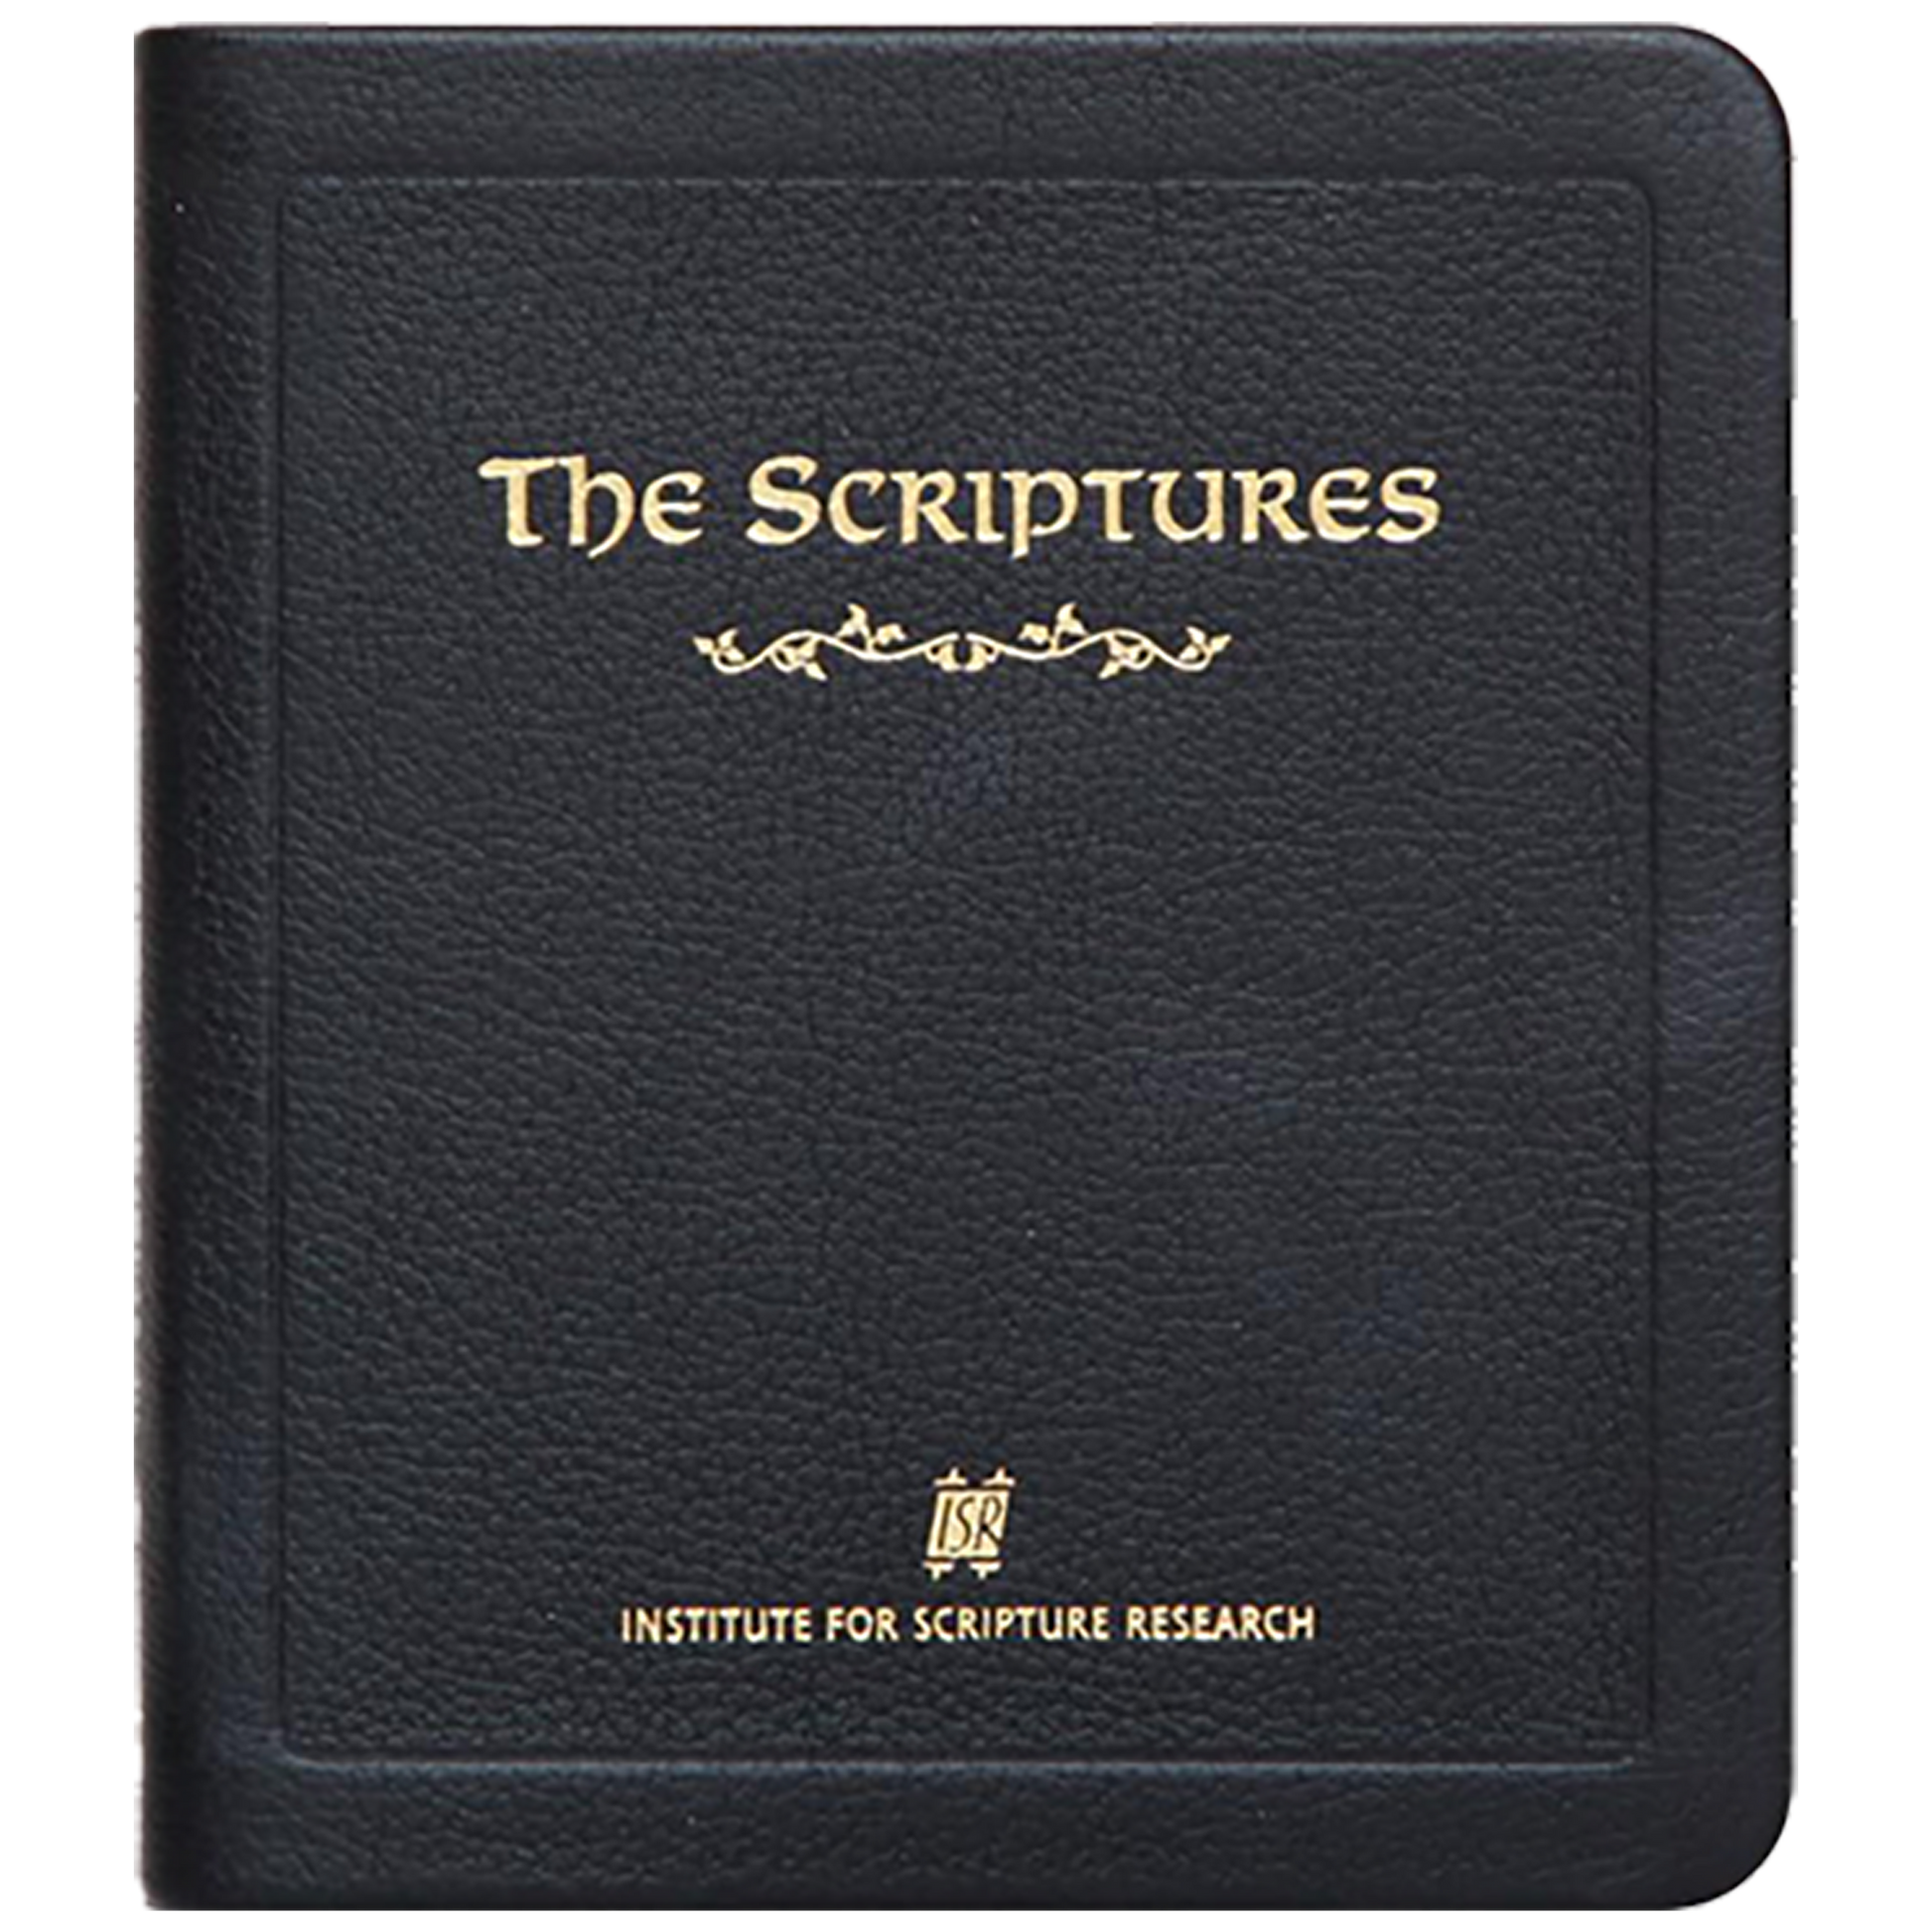 Soft Black Cowhide Leather Pocket Size The Scriptures Bible